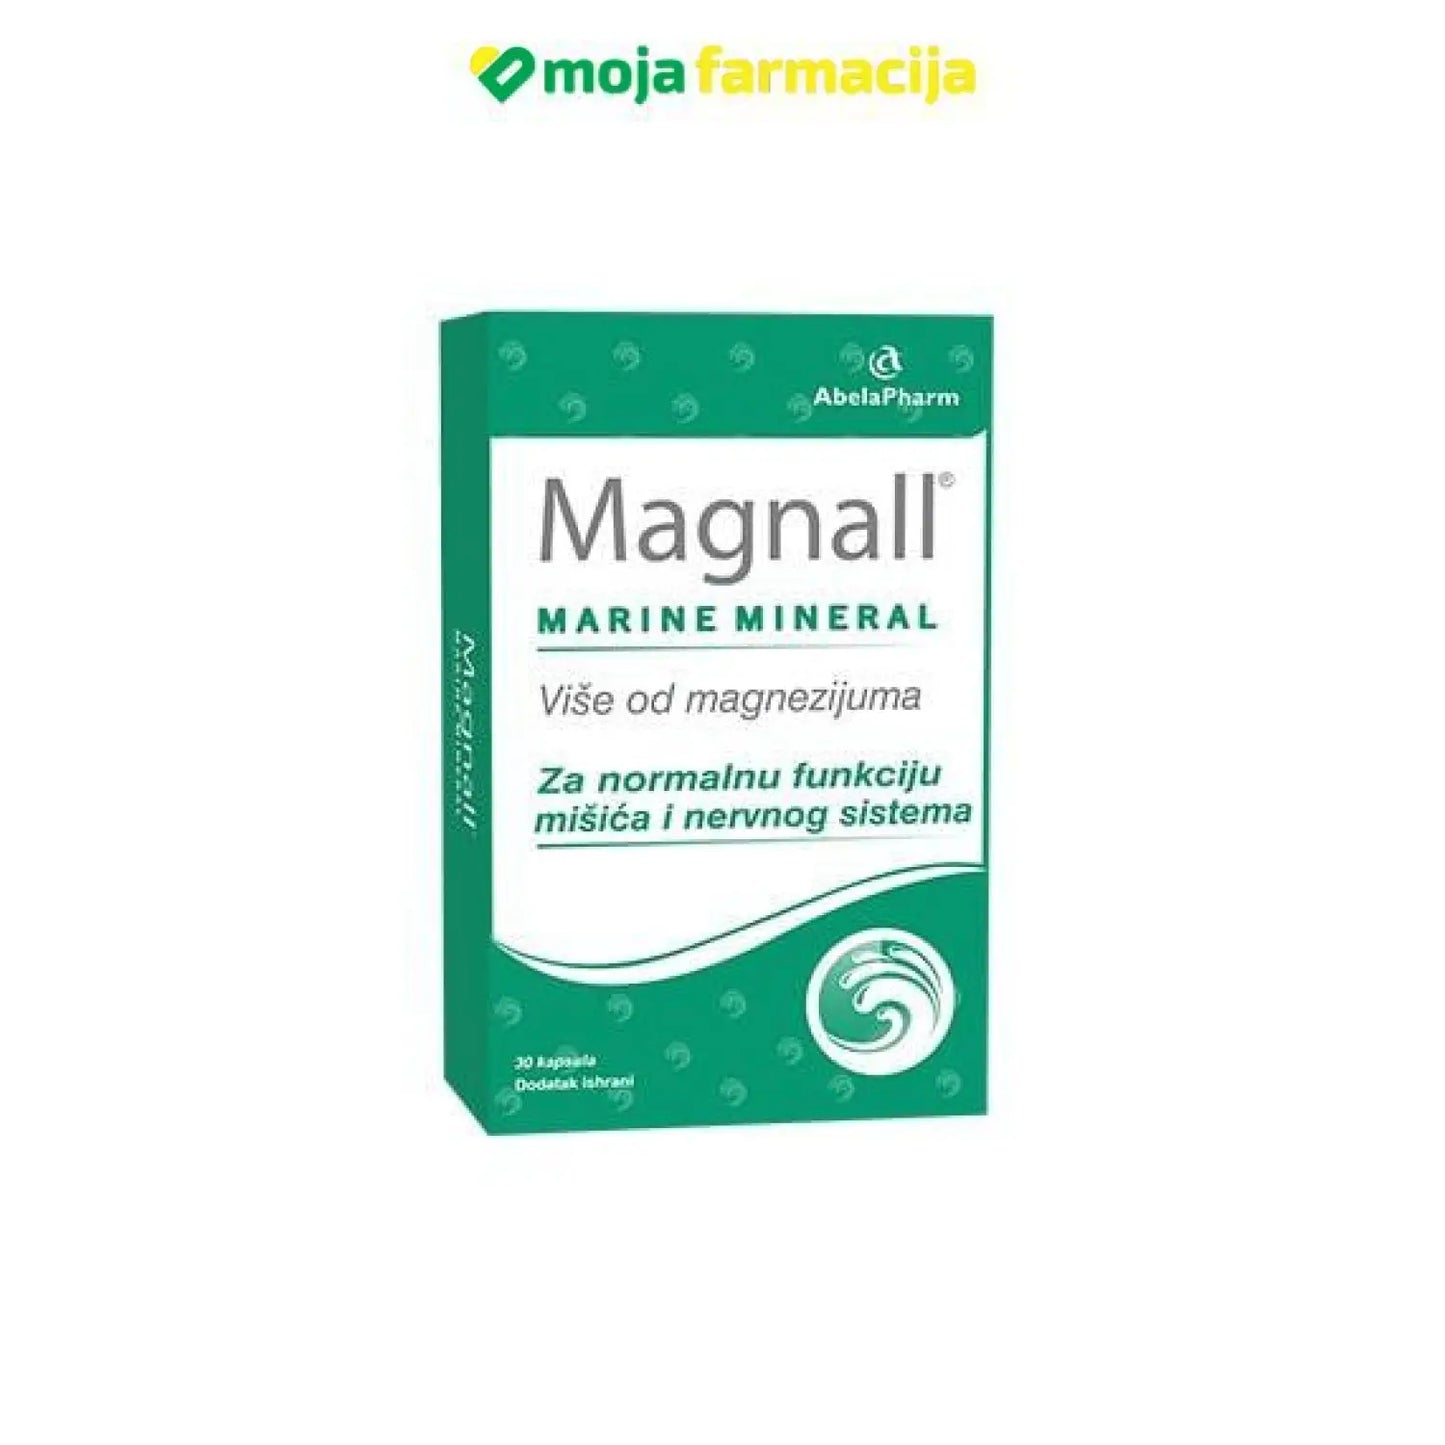 Slika proizvoda Magnall Marine Mineral ABELA PHARM iz online apoteke Moja Farmacija - BIH